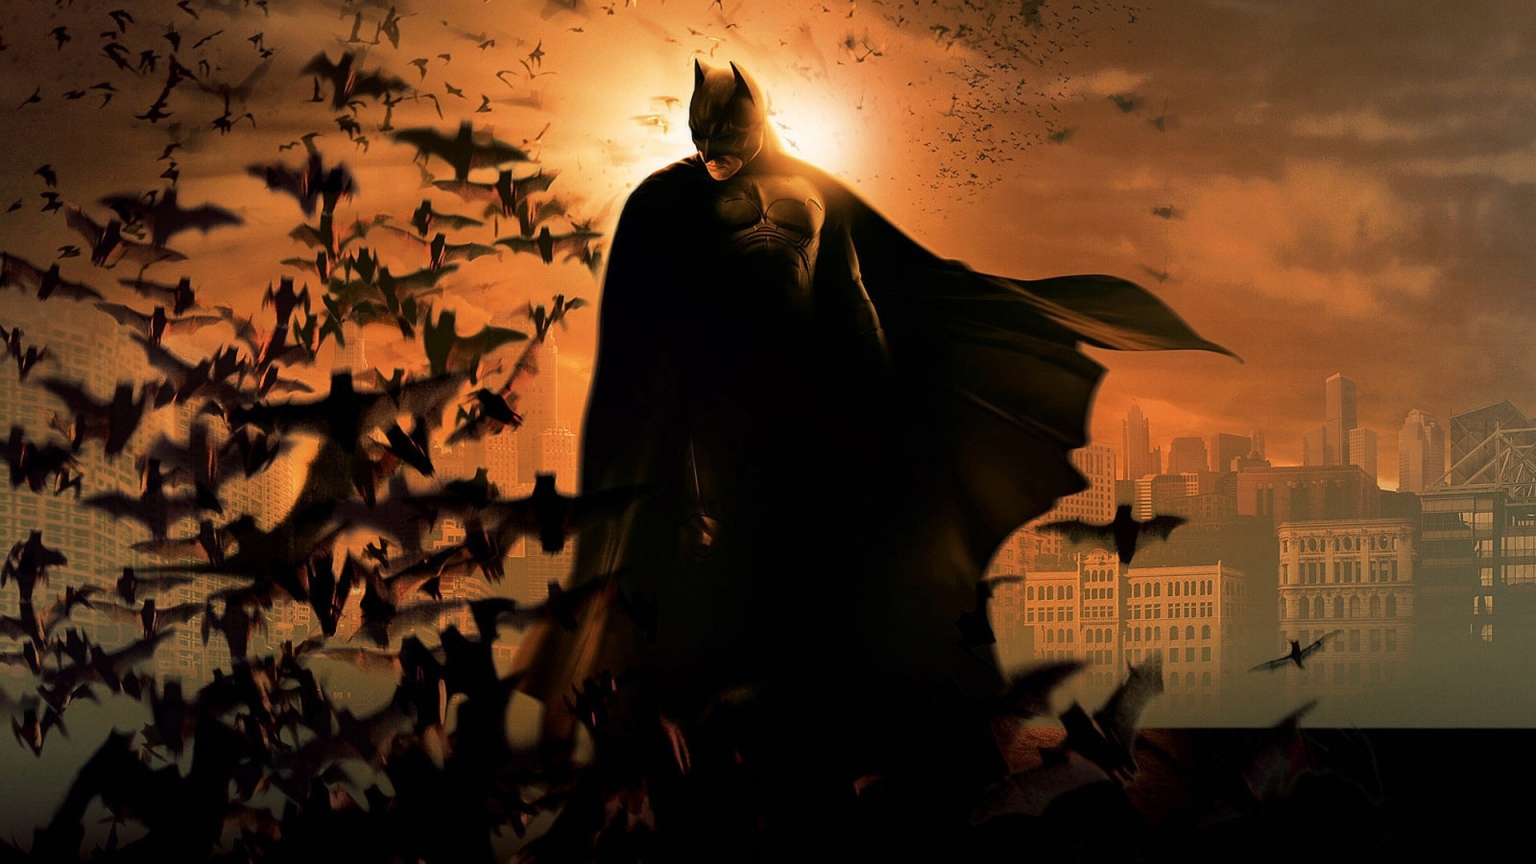 Batman 3 The Dark Knight rises for 1536 x 864 HDTV resolution